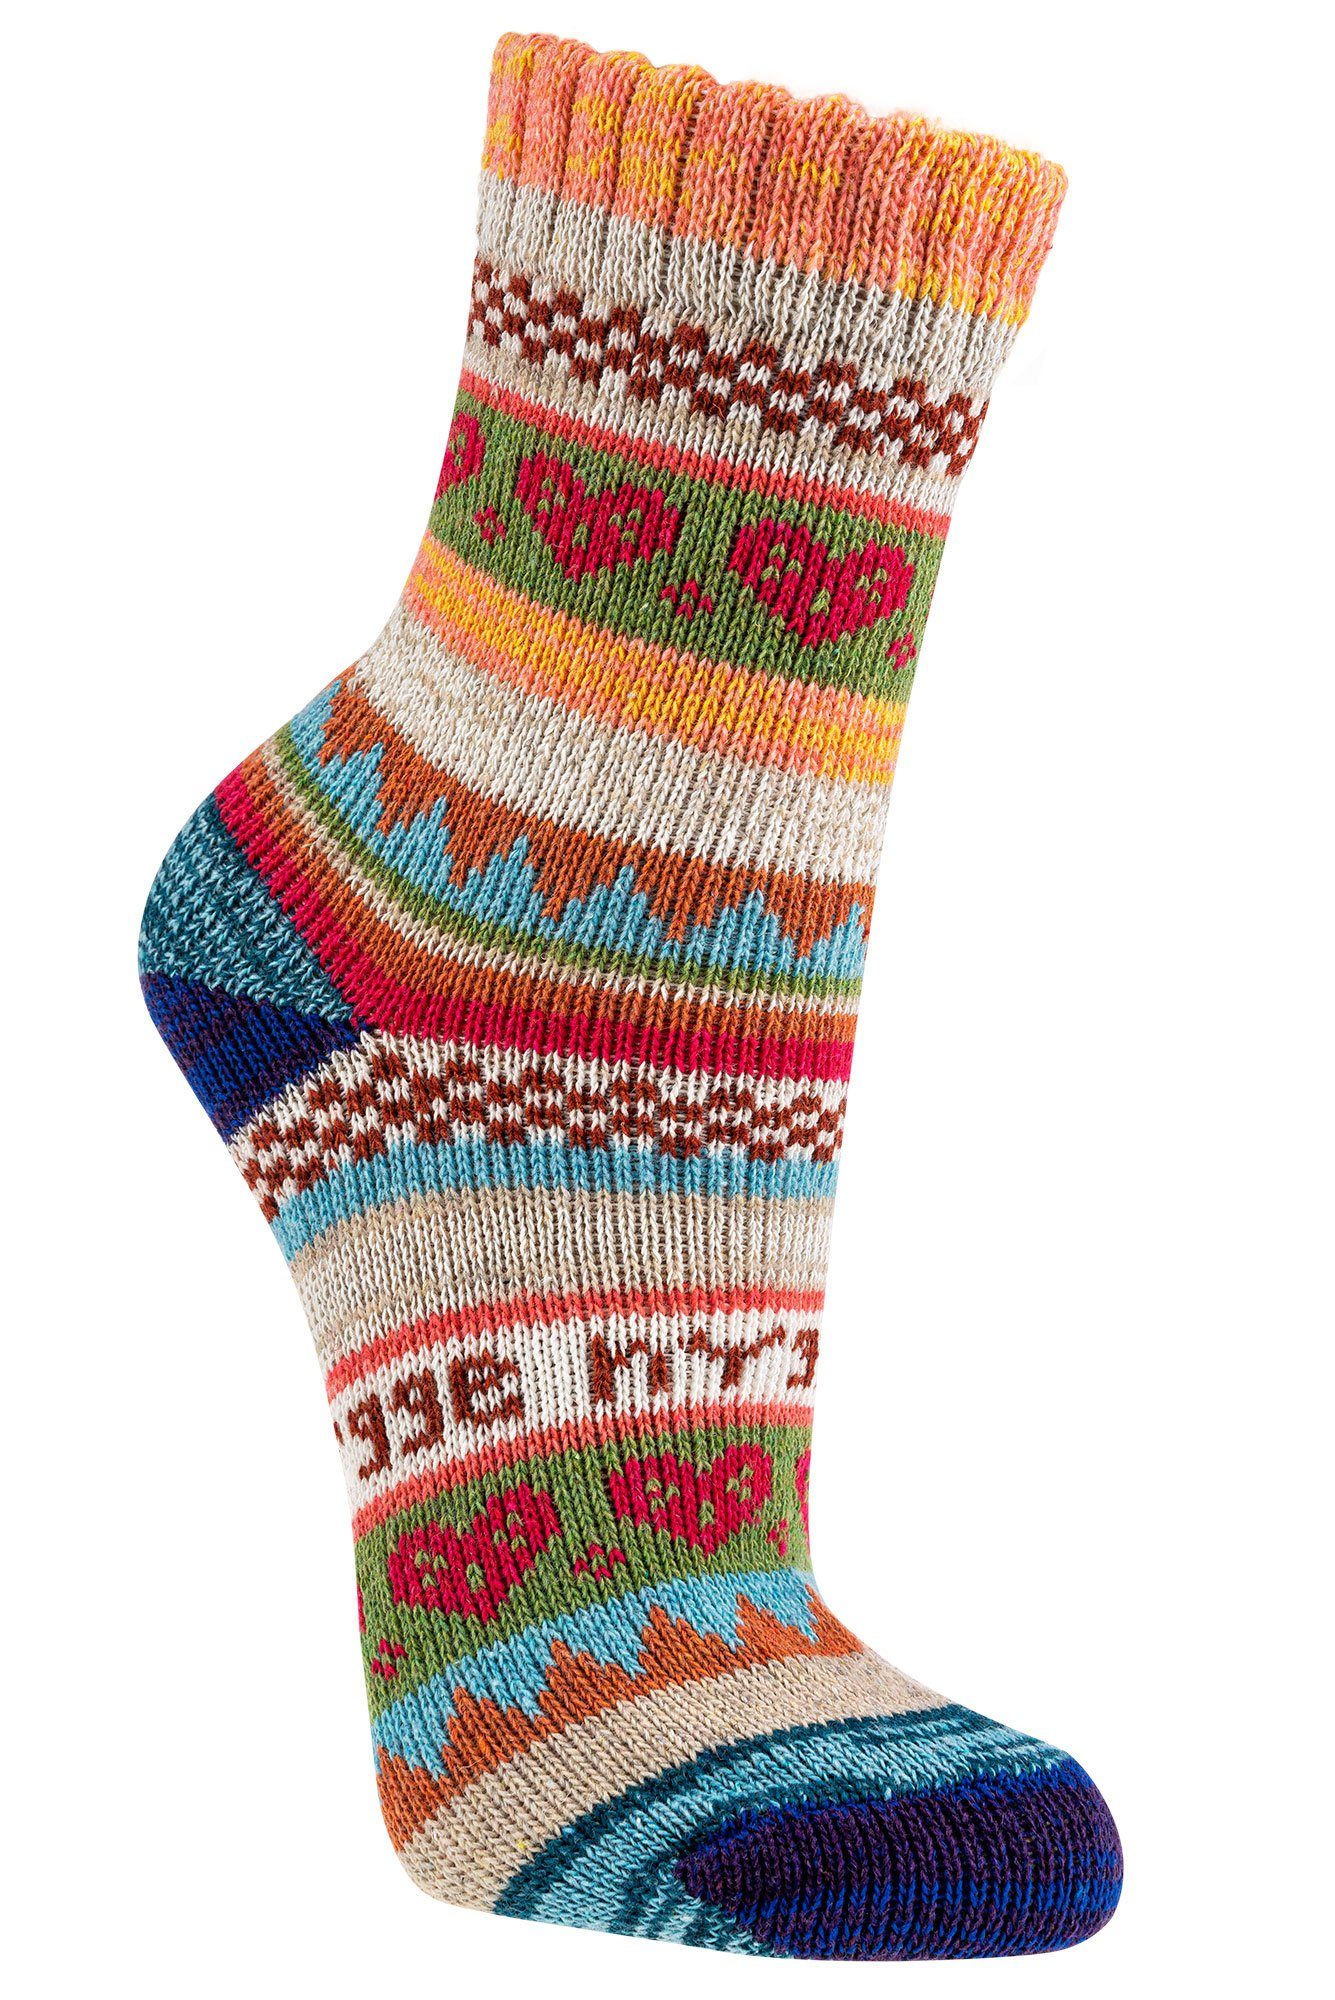 Norwegersocken 4 Socks Socken 90% Bunte Muster mit mit Fun Hygge Baumwolle schönem Norweger